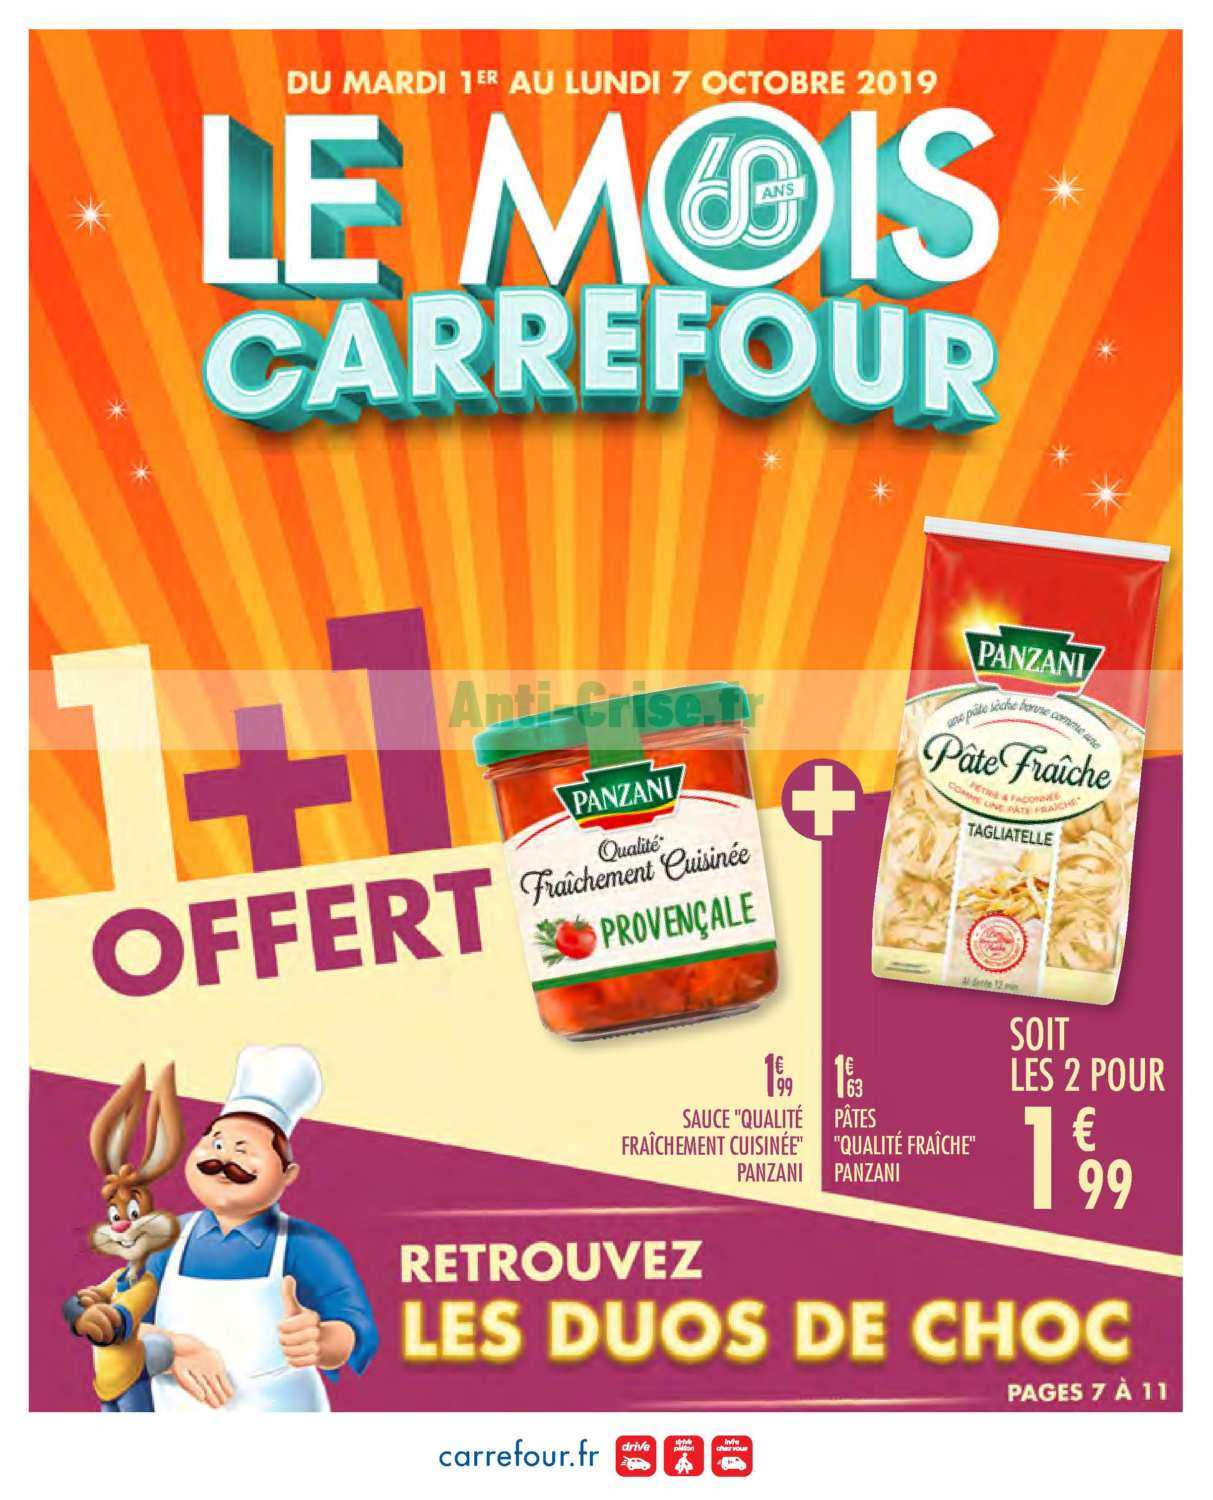 carrefour.fr catalogues